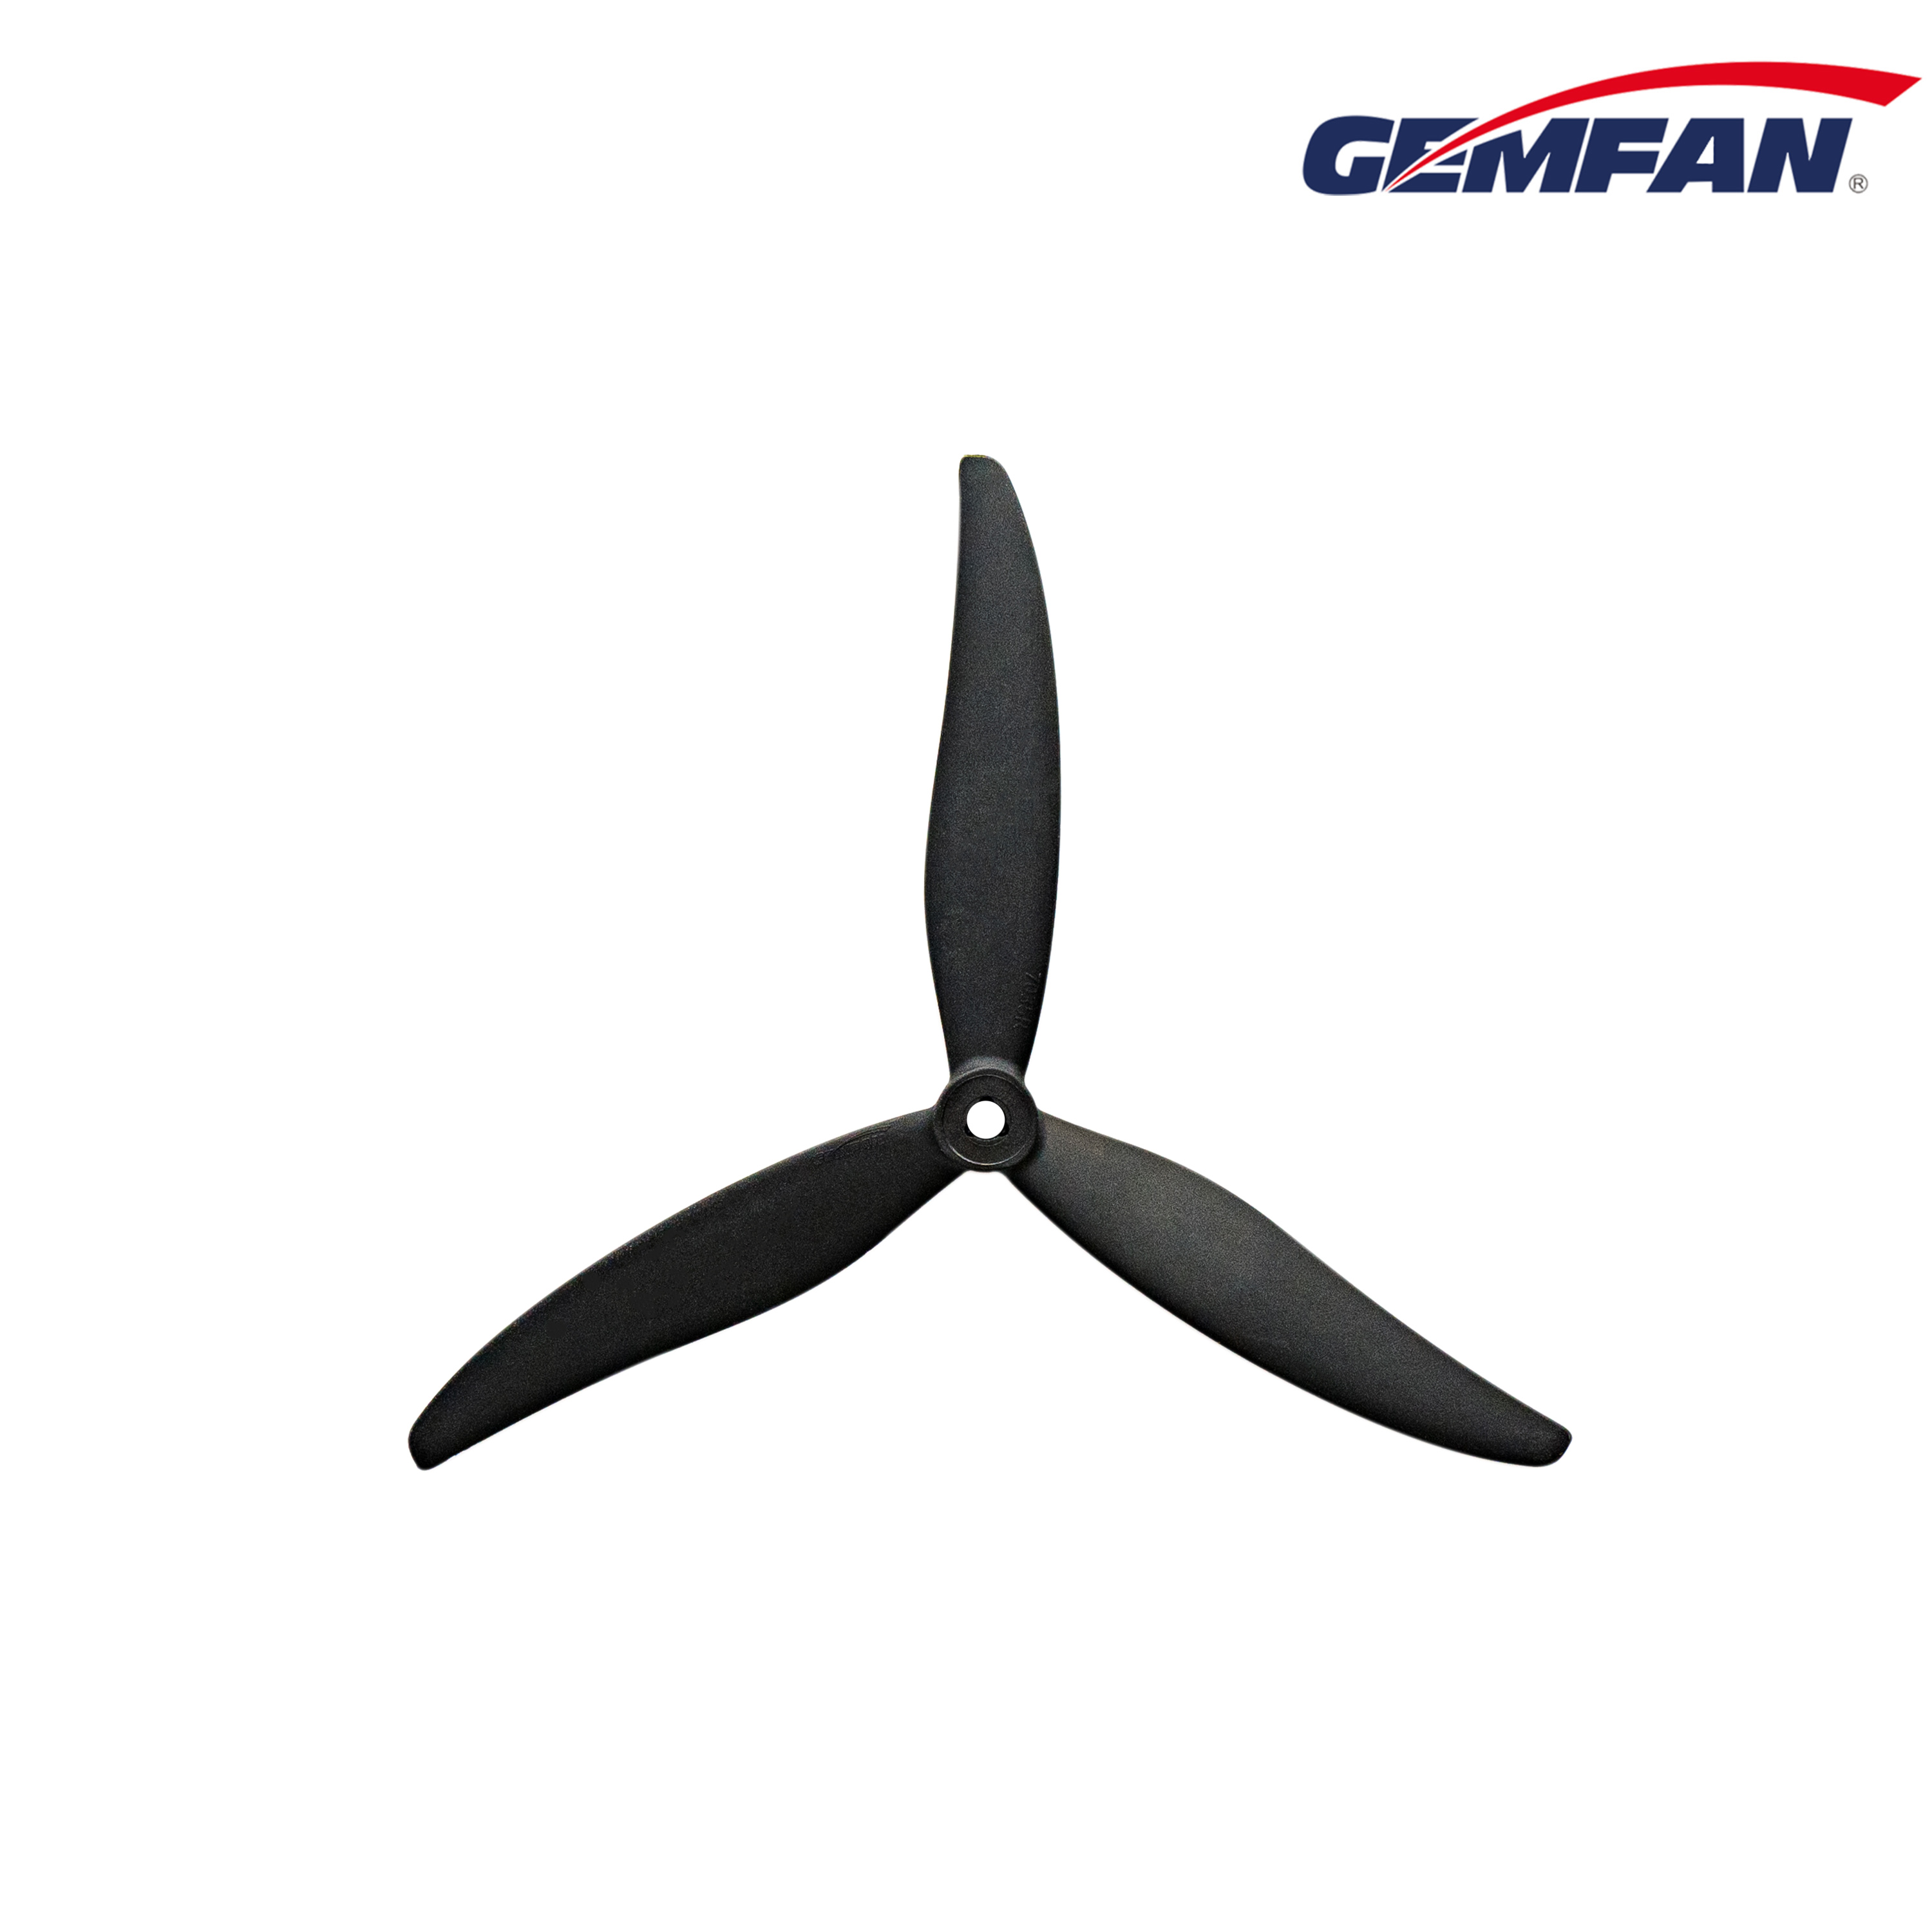 Gemfan 7035-3 Carbon Nylon for Cinelifter & Macro Quad